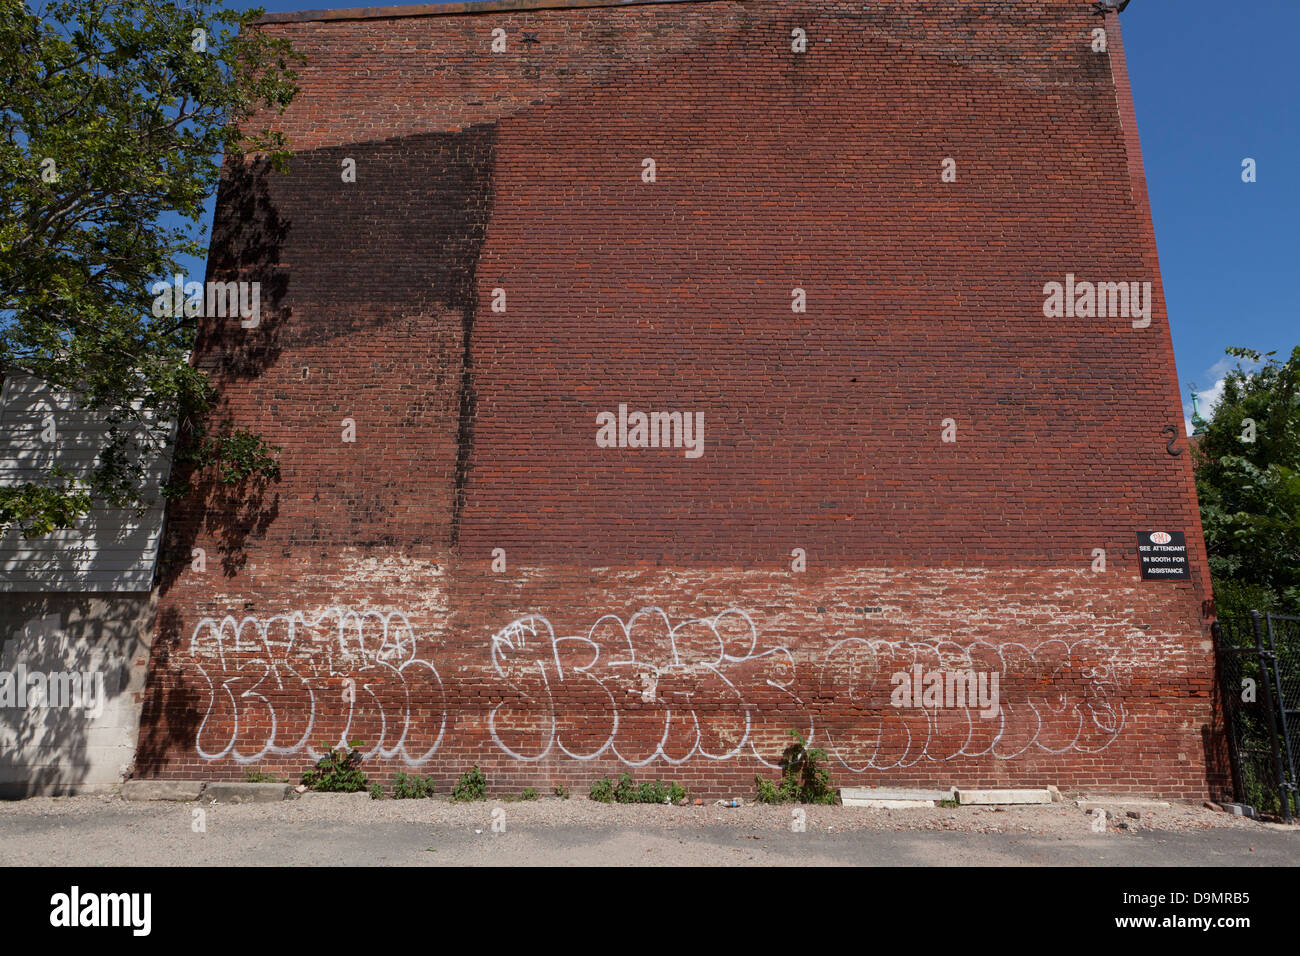 Graffiti on side of brick building - USA Stock Photo